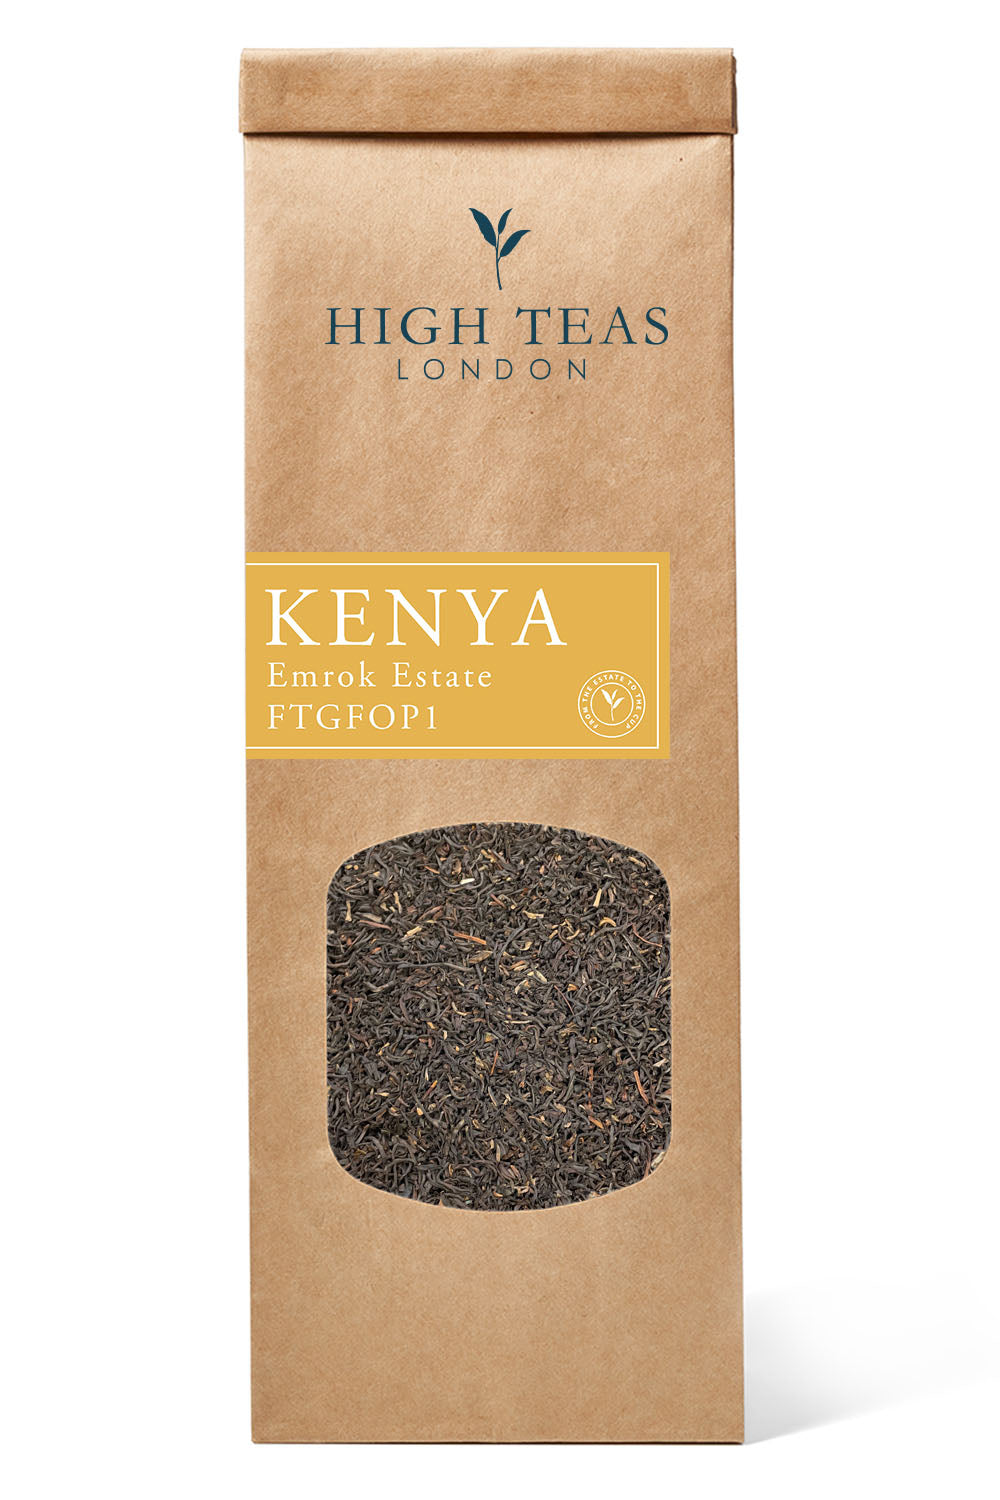 Kenya Emrok Estate Tea FTGFOP1-50g-Loose Leaf Tea-High Teas